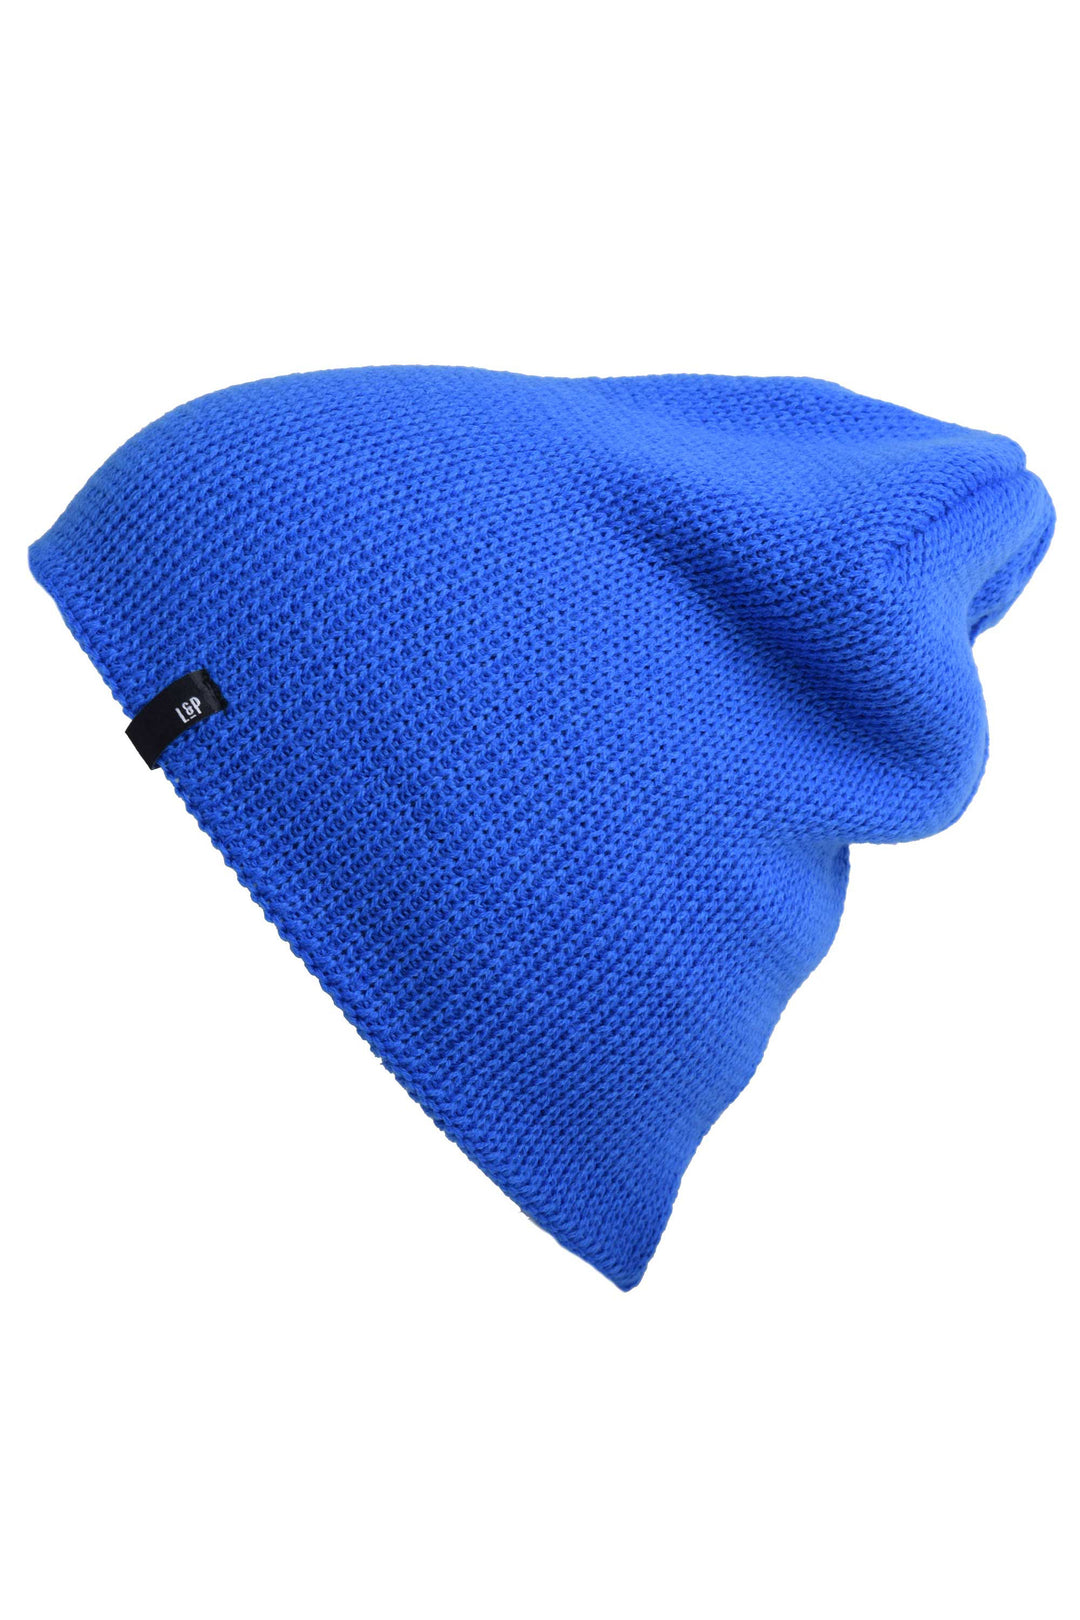 Knit Corbeille 8L Bleu